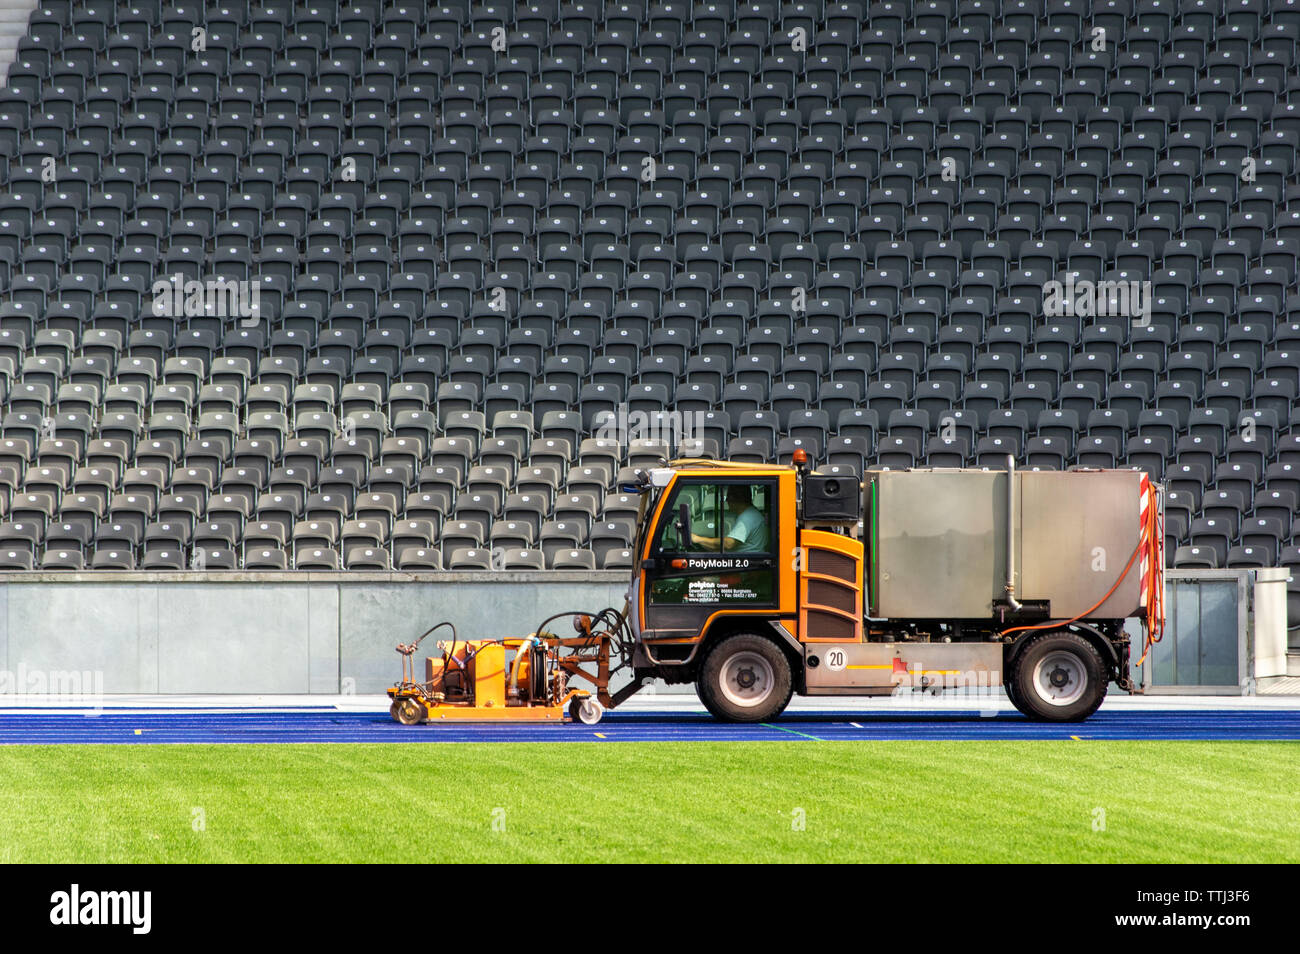 truck cleaning the tartan running track of Olympiastadion Berlin Stock Photo